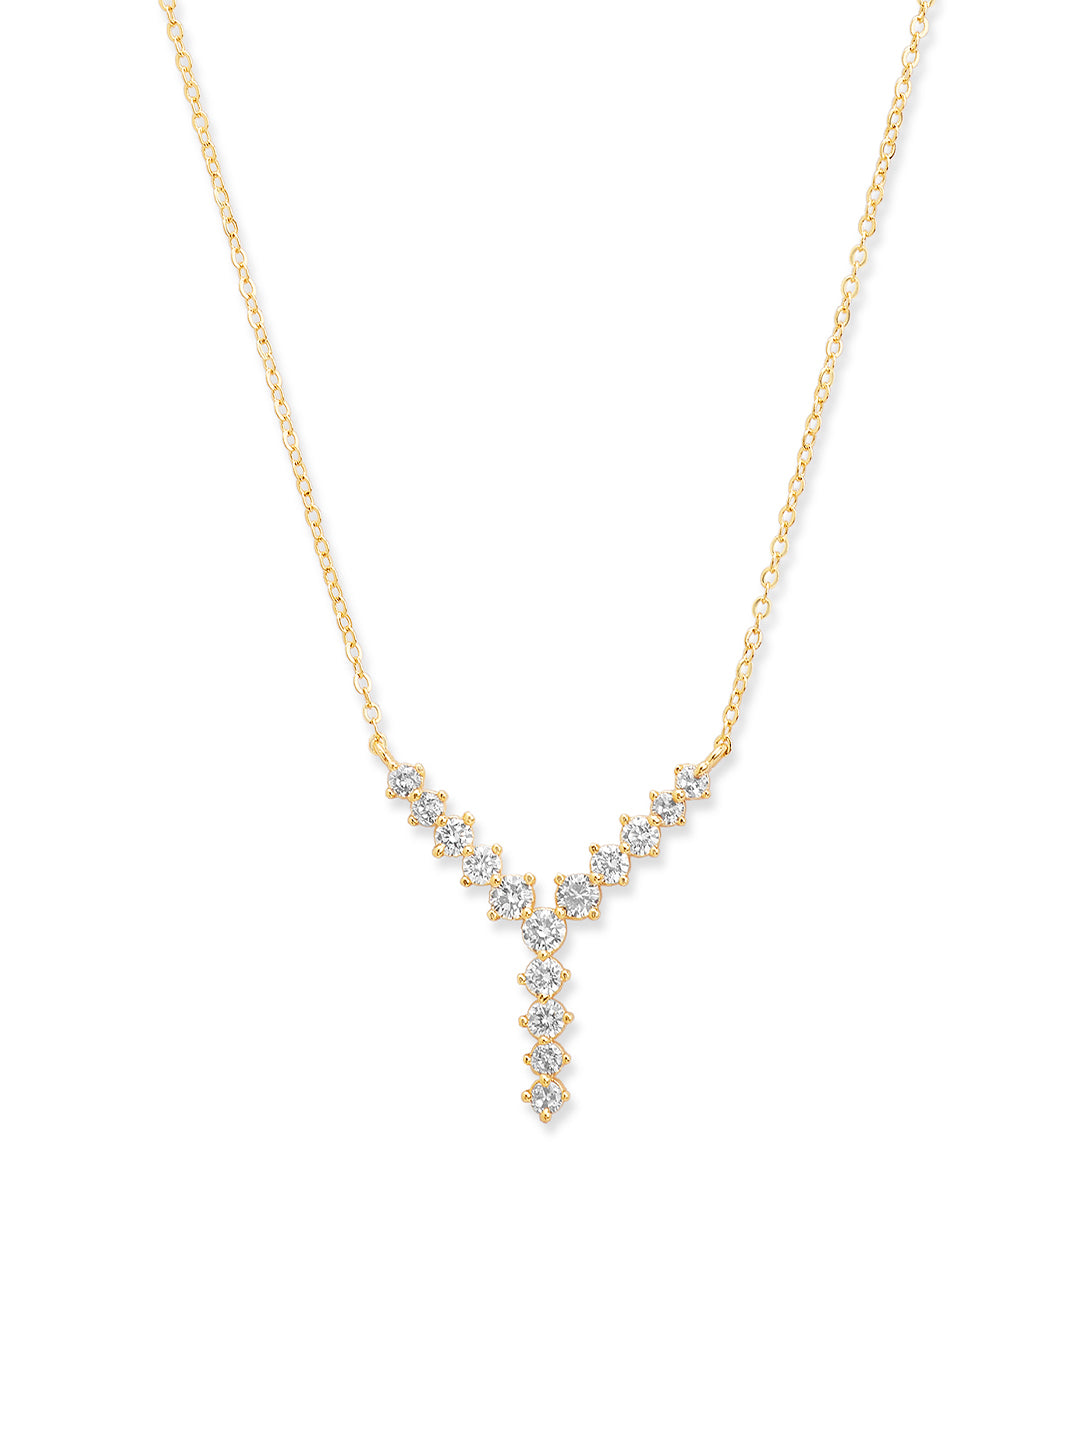 Y- Shape Graduating Diamond Necklace